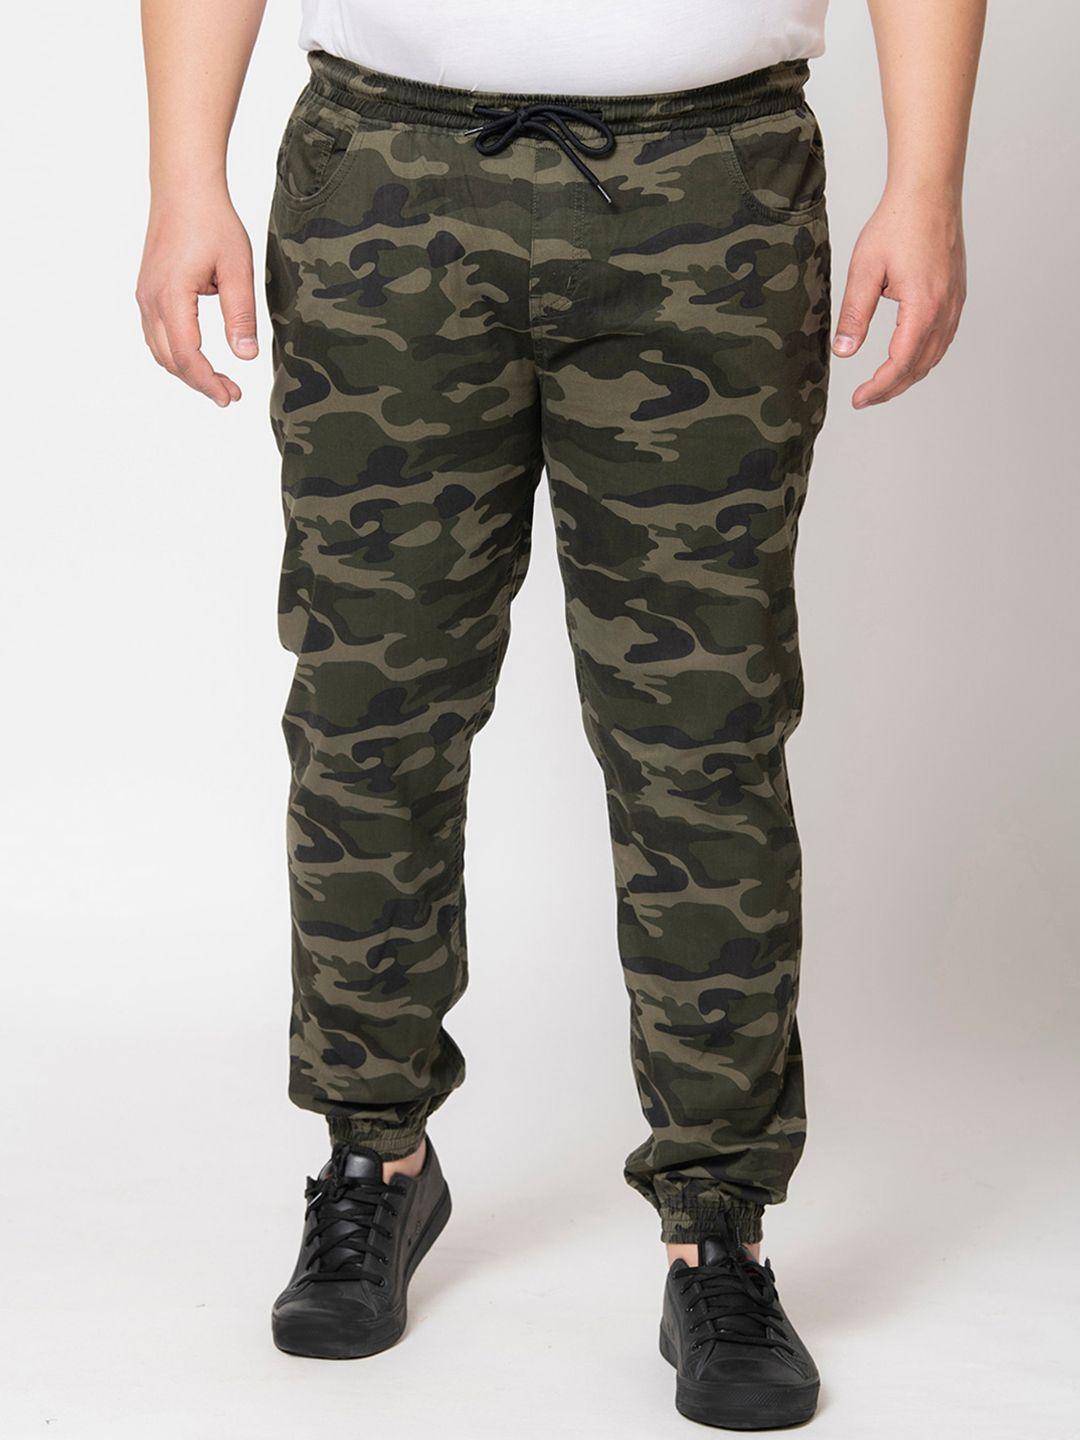 ivoc plus men plus size camouflage printed pure cotton regular fit sports joggers